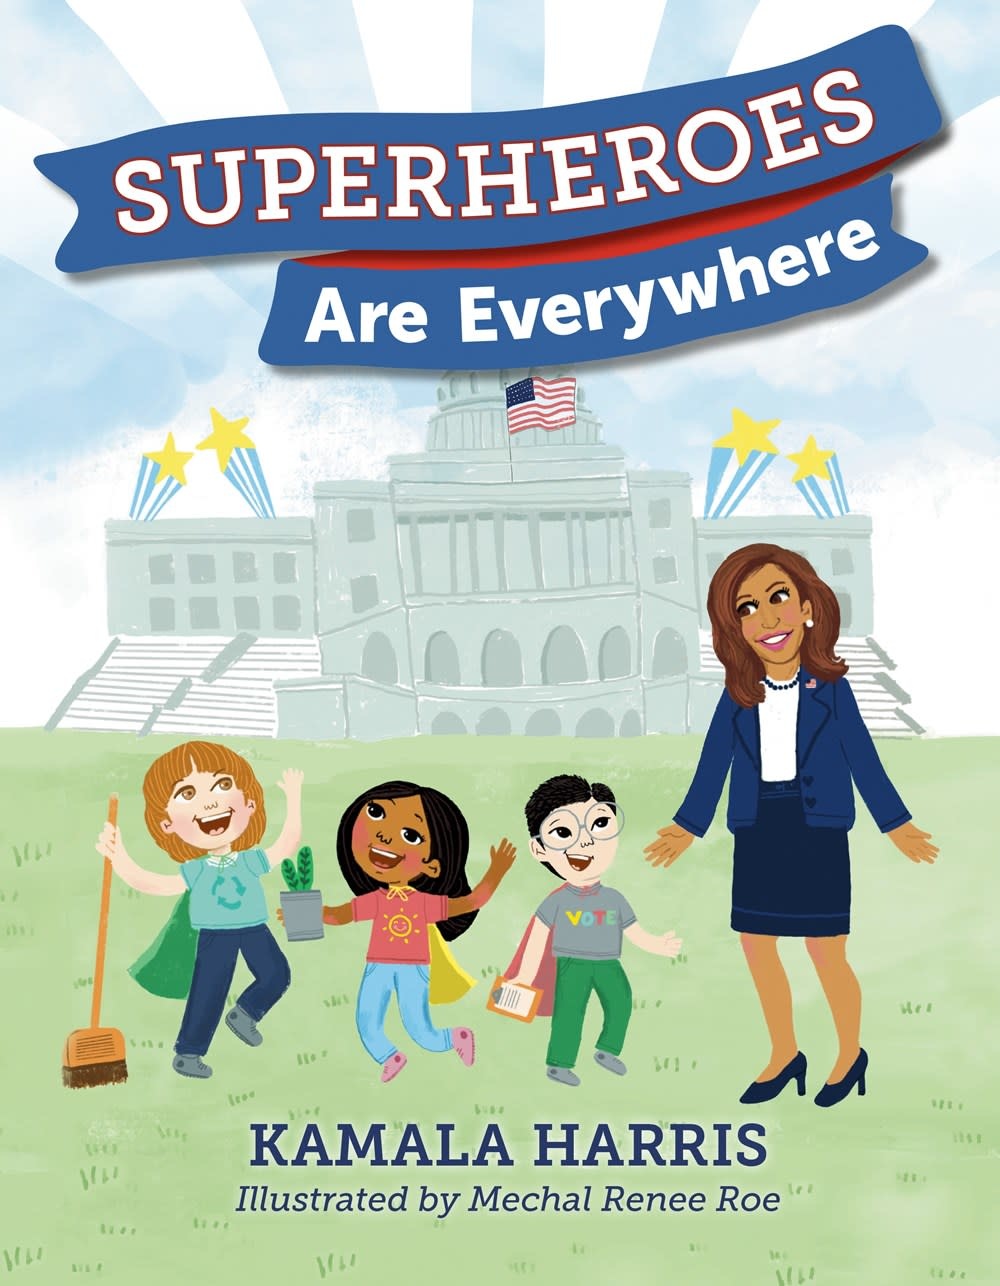 Superheroes Are Everywhere [Kamala Harris]